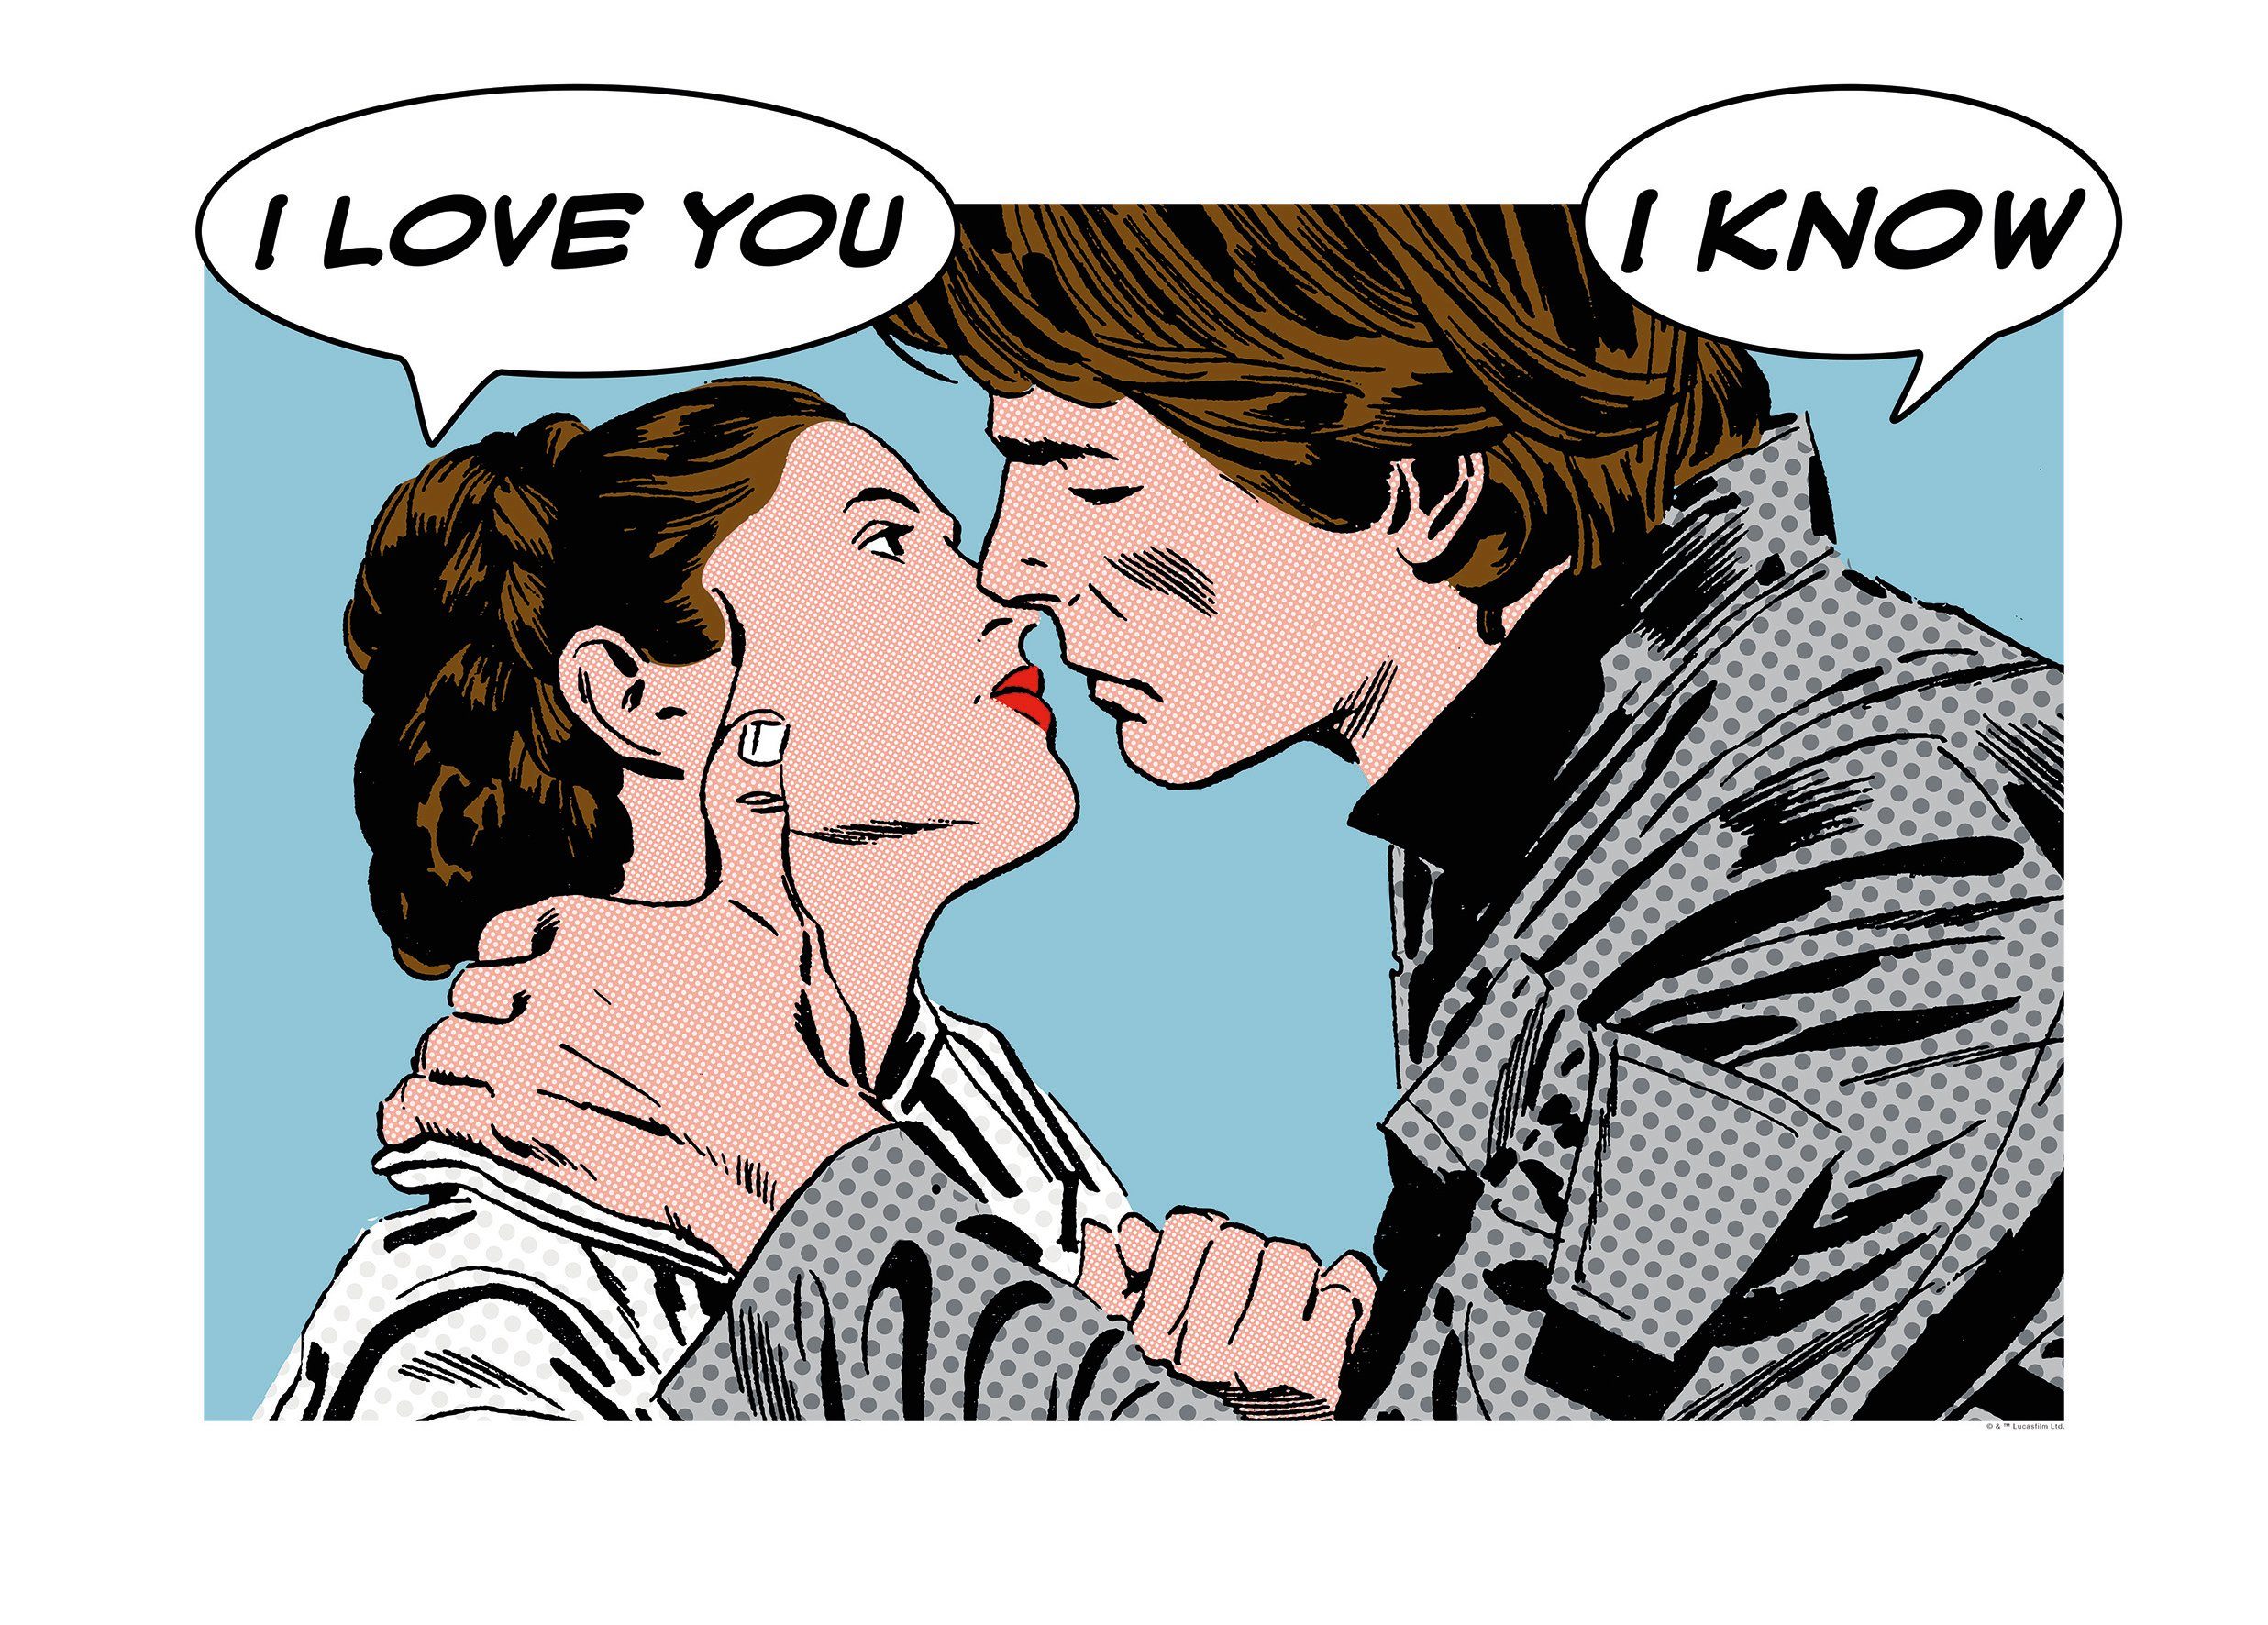 Komar Poster Star Wars Classic stripverhaal aandeel Leia Han